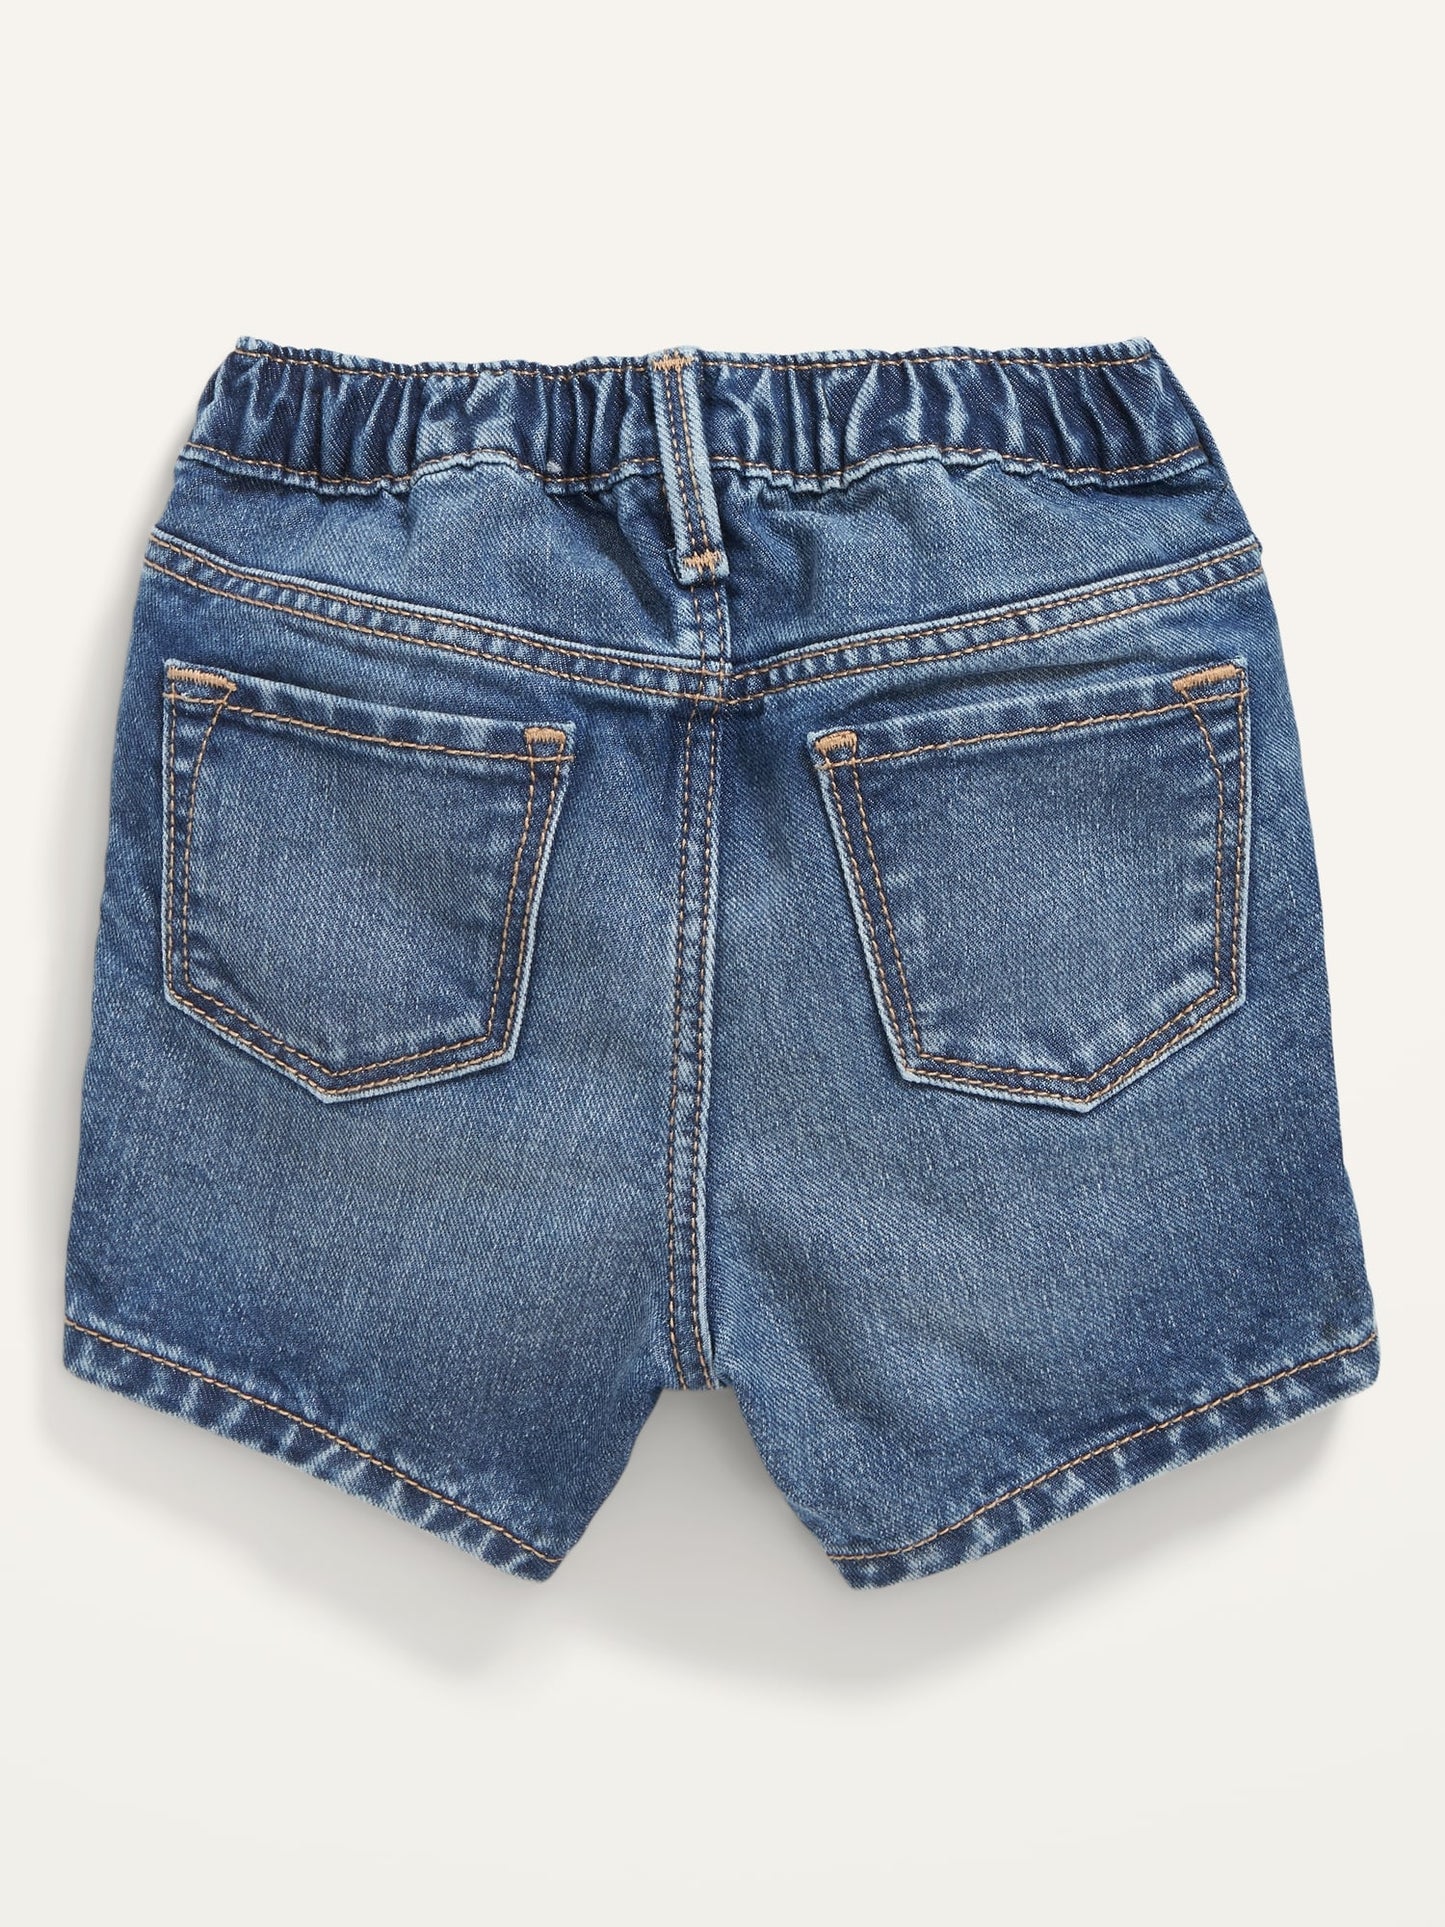 Shorts de jean con cintura elástica para niñas pequeñas